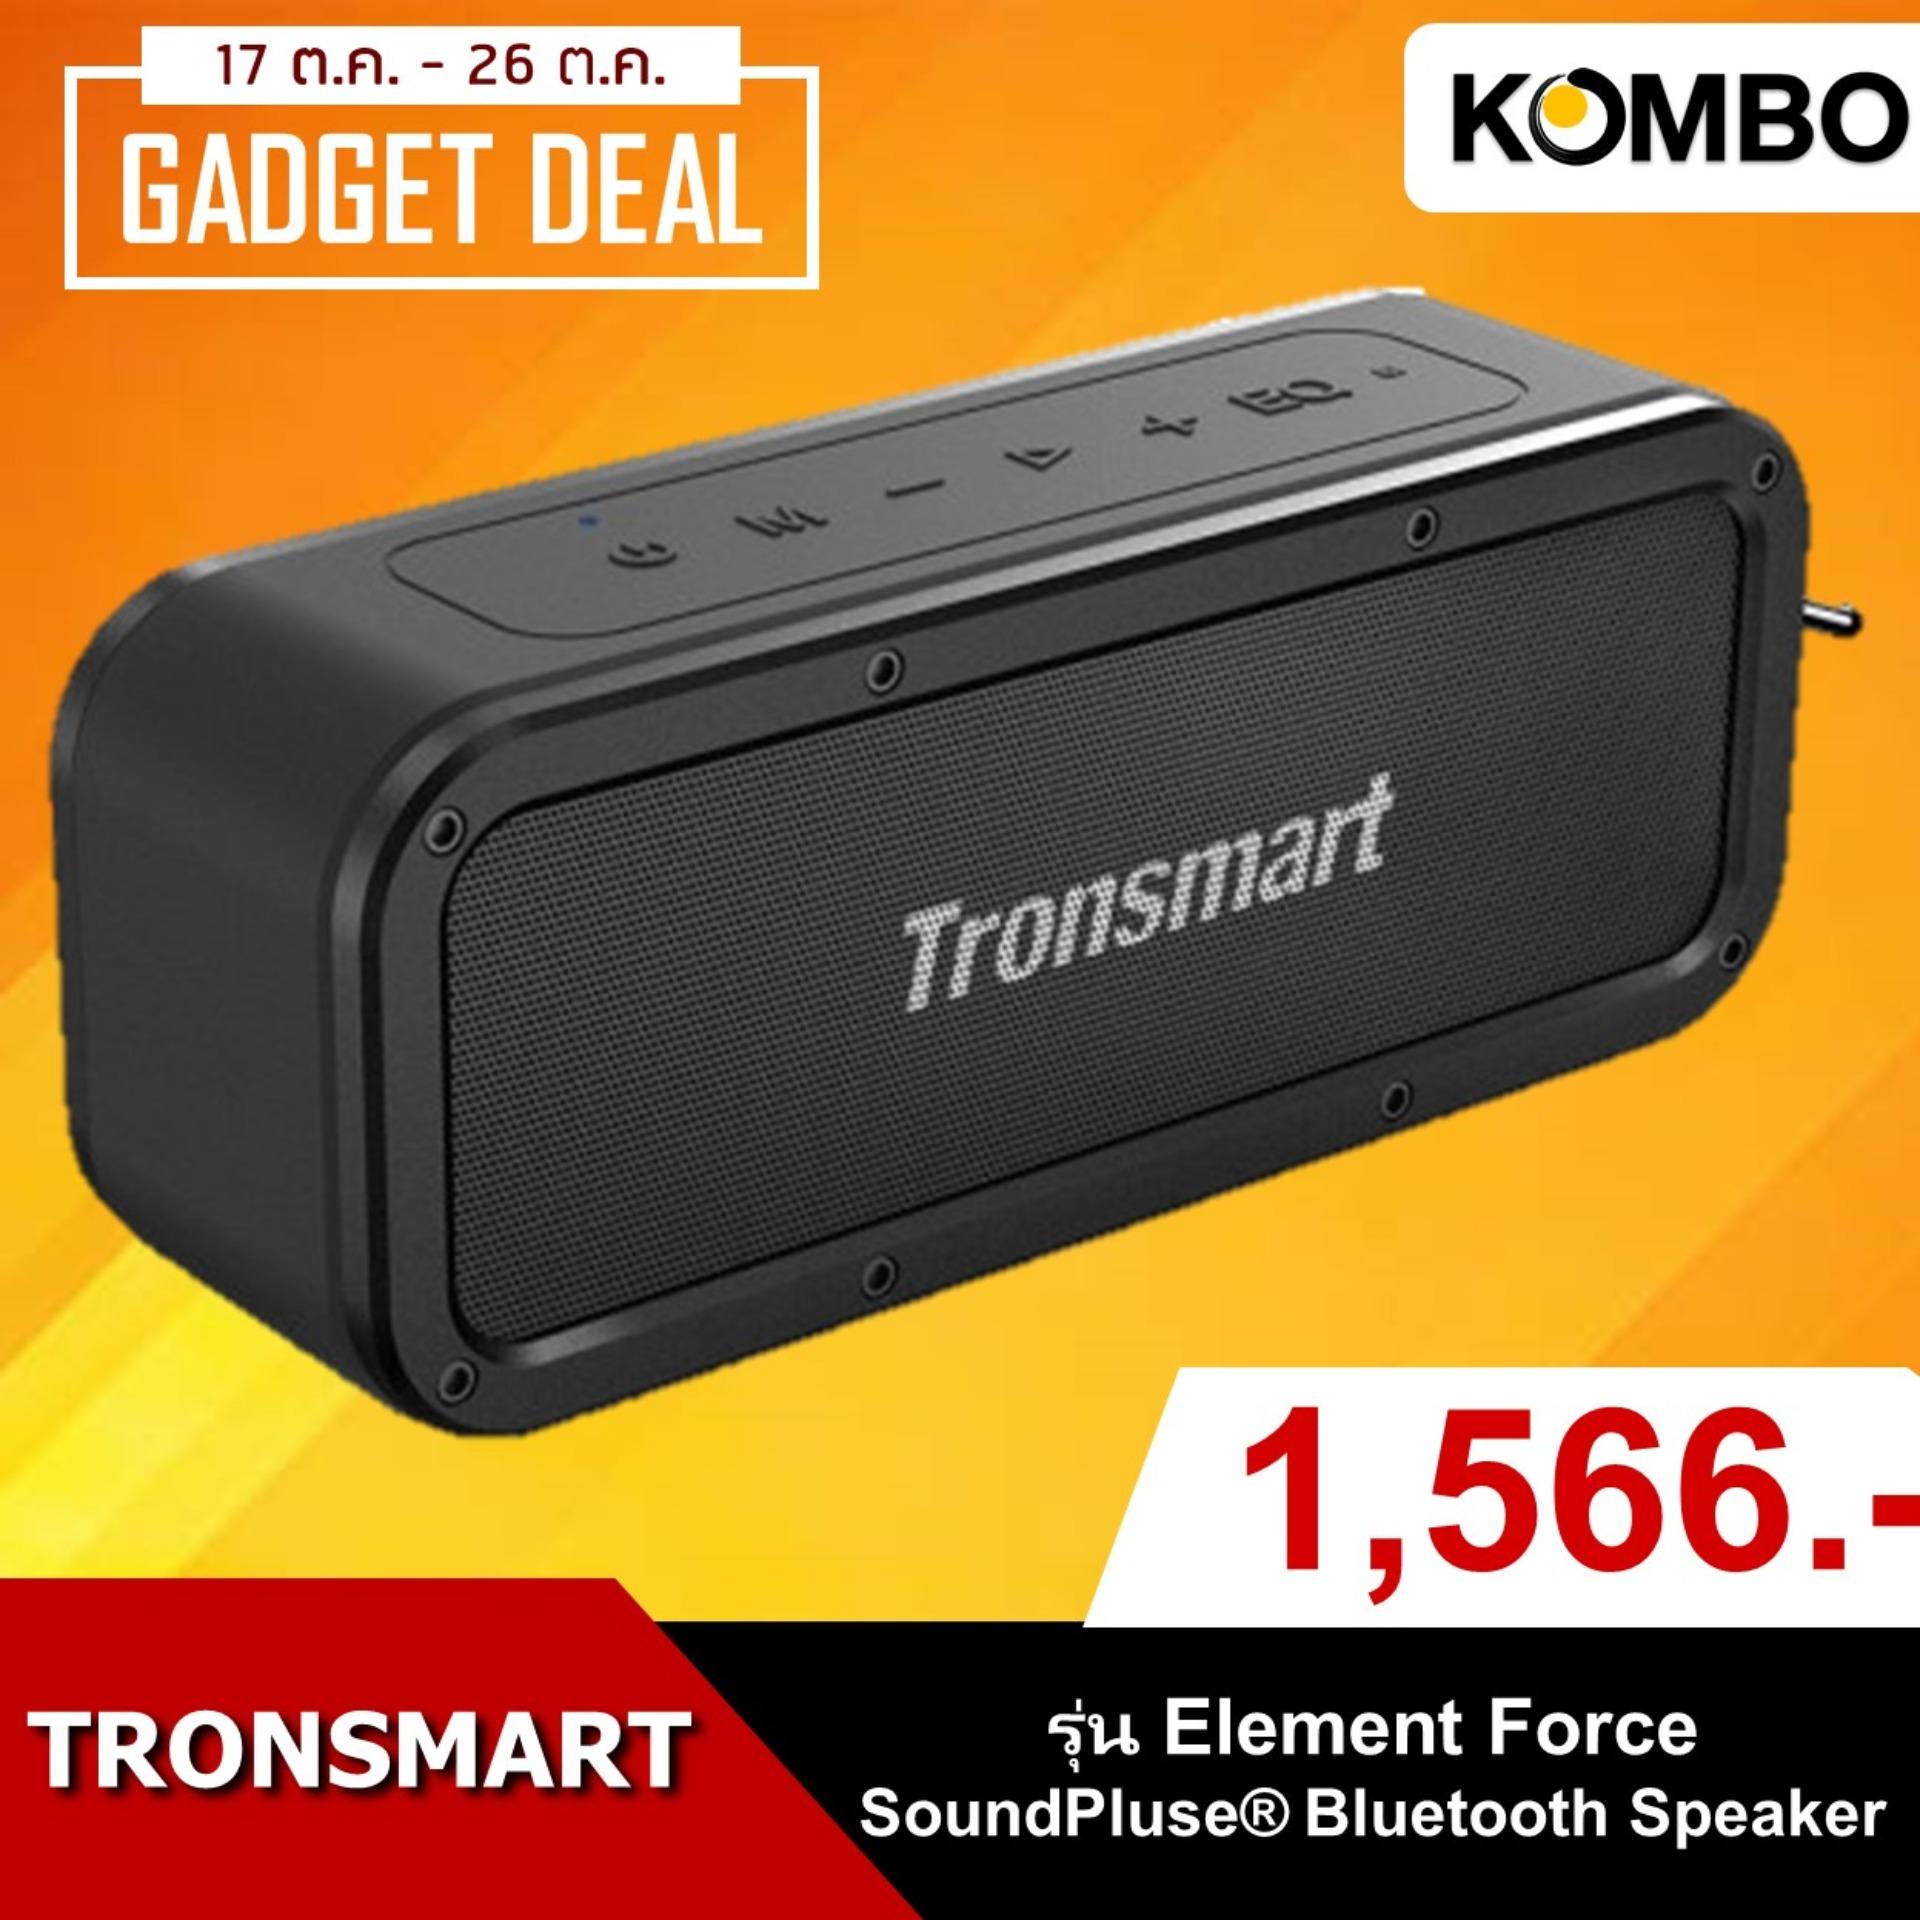 Tronsmart Bluetooth Speaker รุ่น Force (Soundpulse) ของแท้ 100% 40W IPX7 Water Resistant เบสแน่นพร้อม Tri-Base Effect ซัพพอร์ต Bluetooth 5.0 เล่นได้สูงสุด 15 ชั่วโมงต่อการชาร์จหนึ่งครั้ง ประกันร้าน by Kombo Gadget